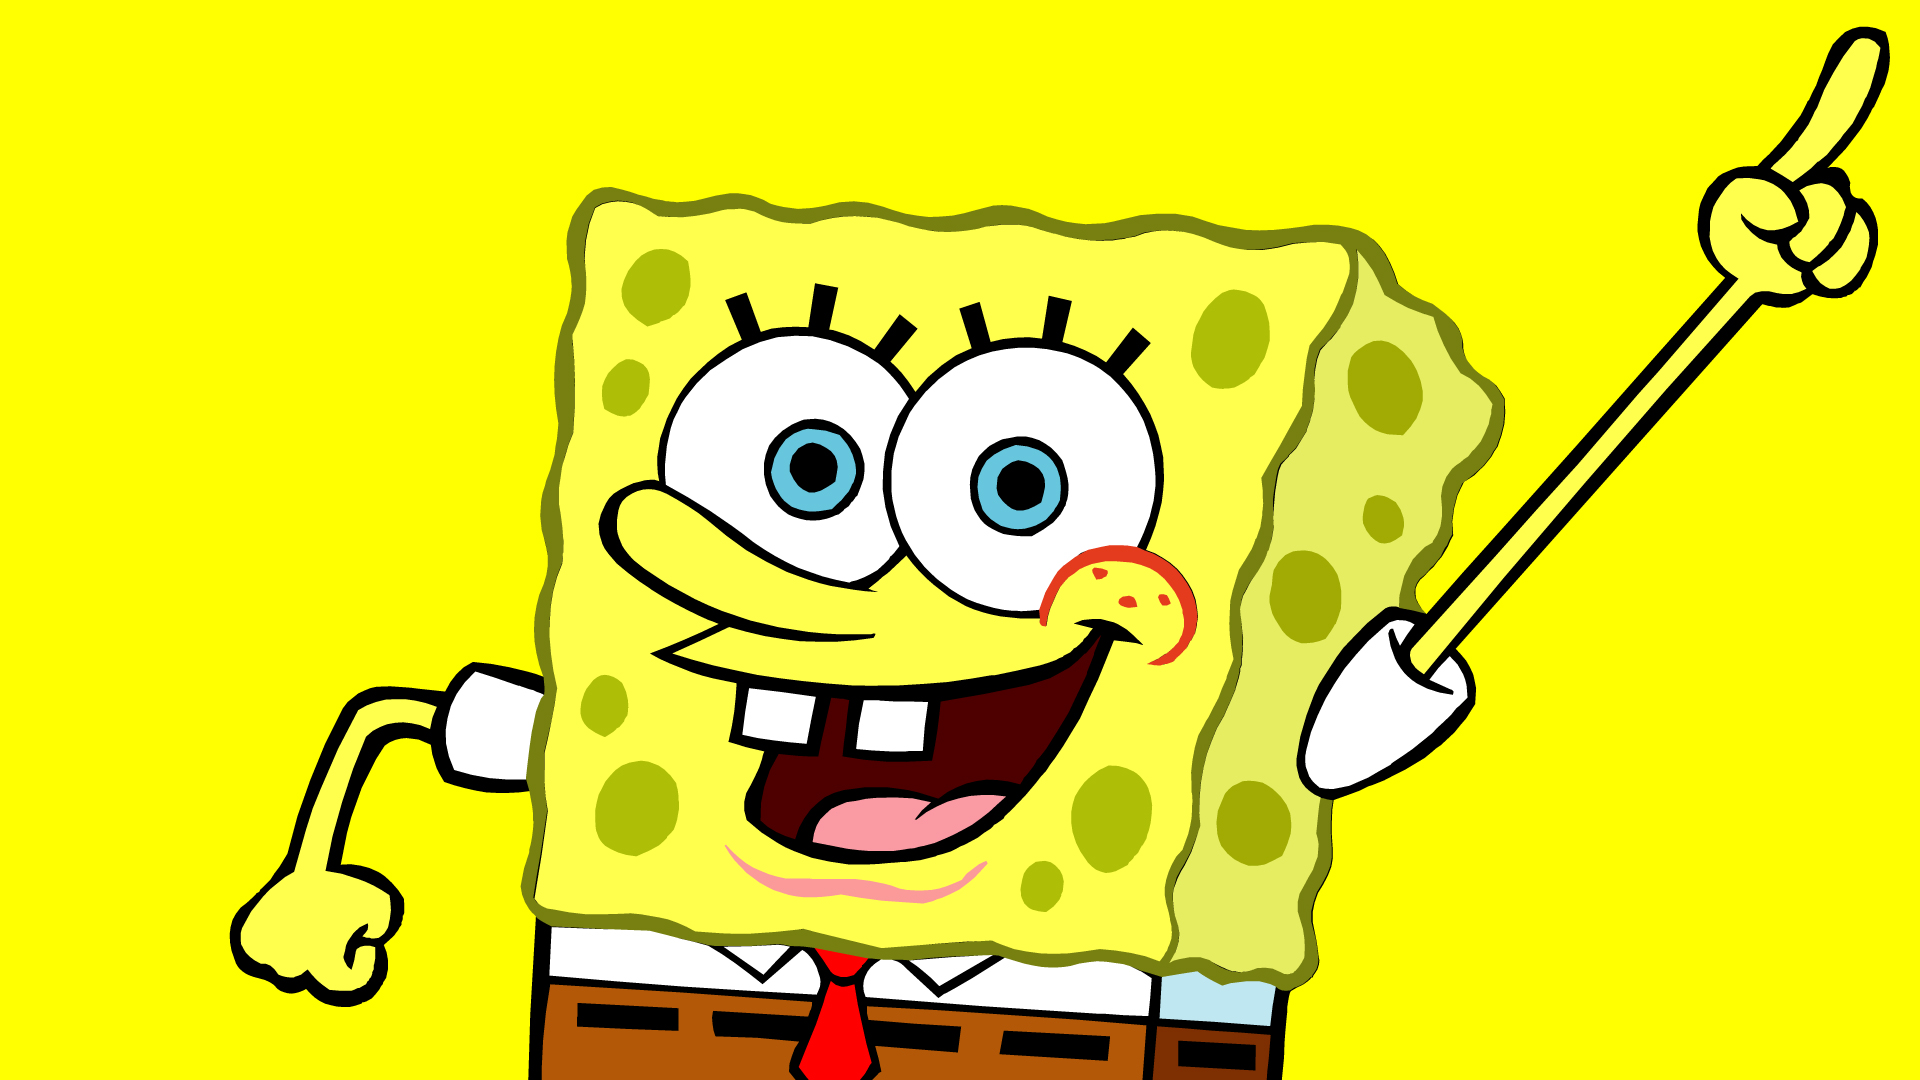 SpongeBob SquarePants wallpapers HD number one